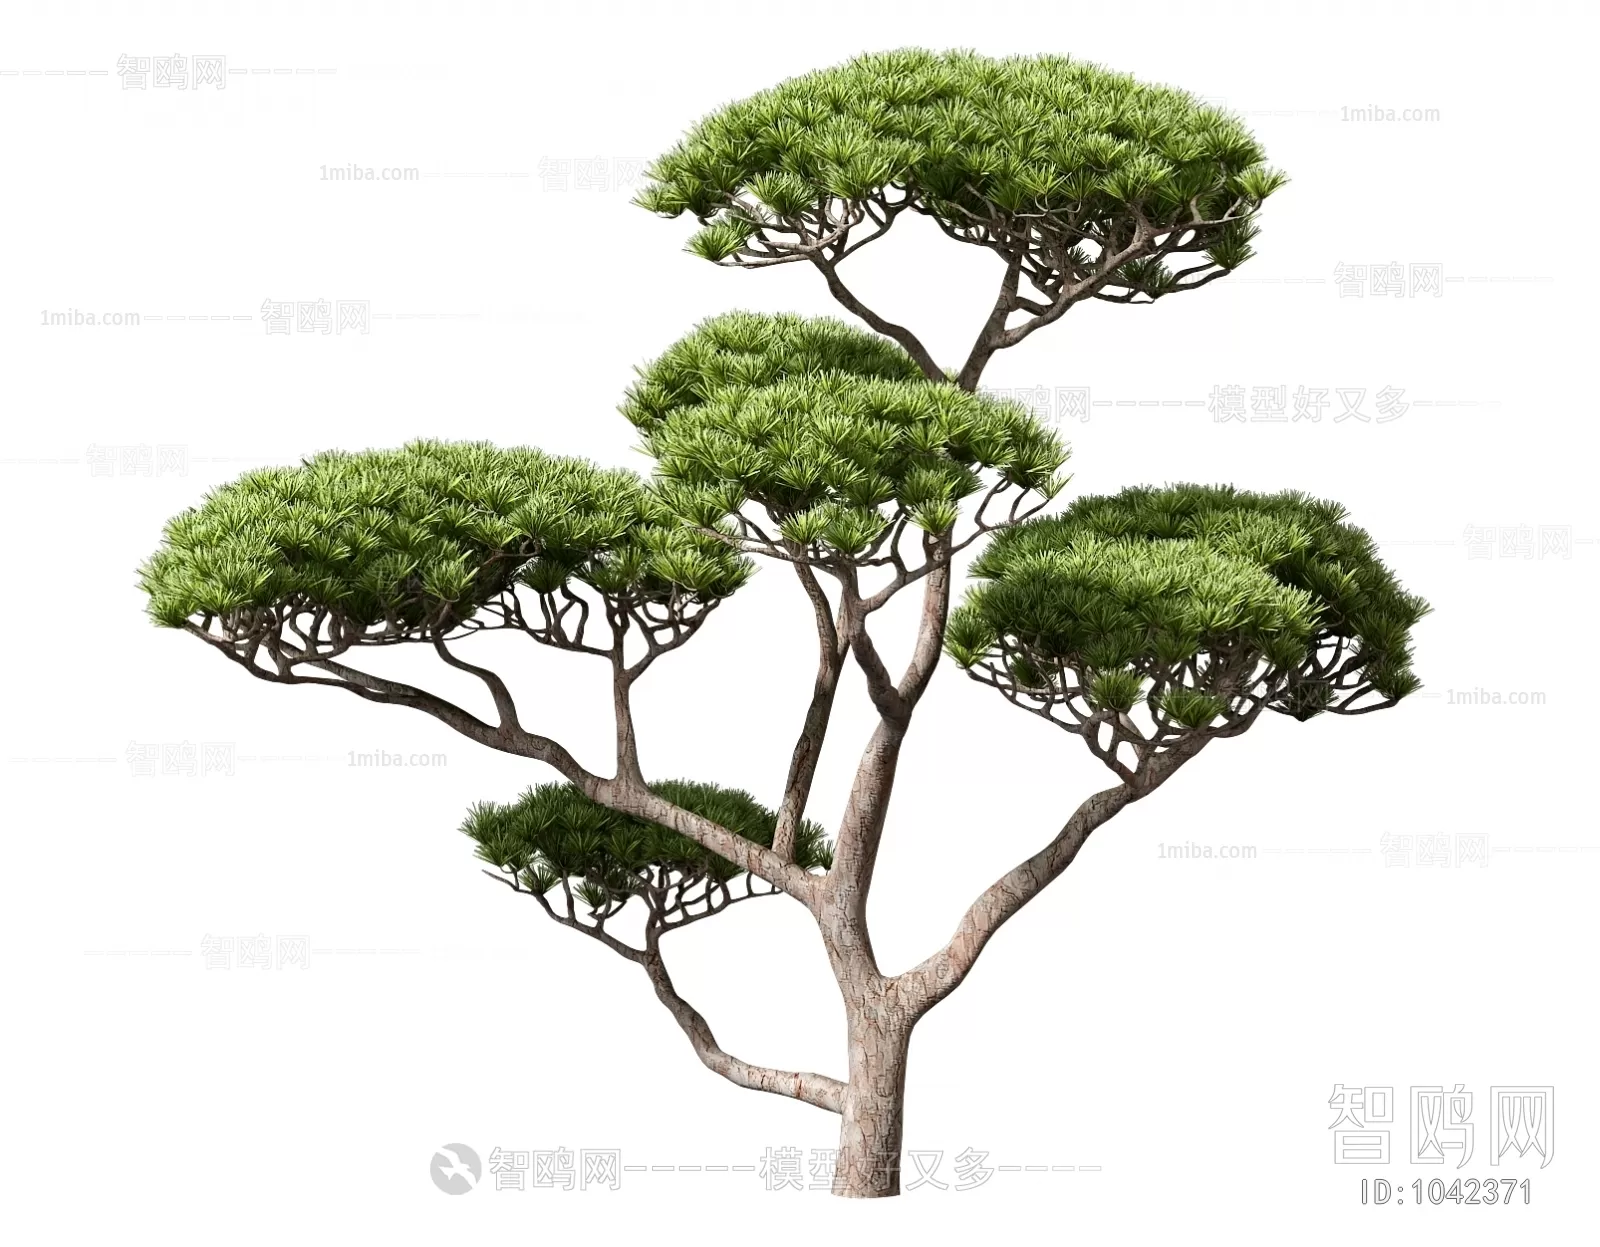 TREE – PLANTS – 3DS MAX MODELS – 037 – PRO